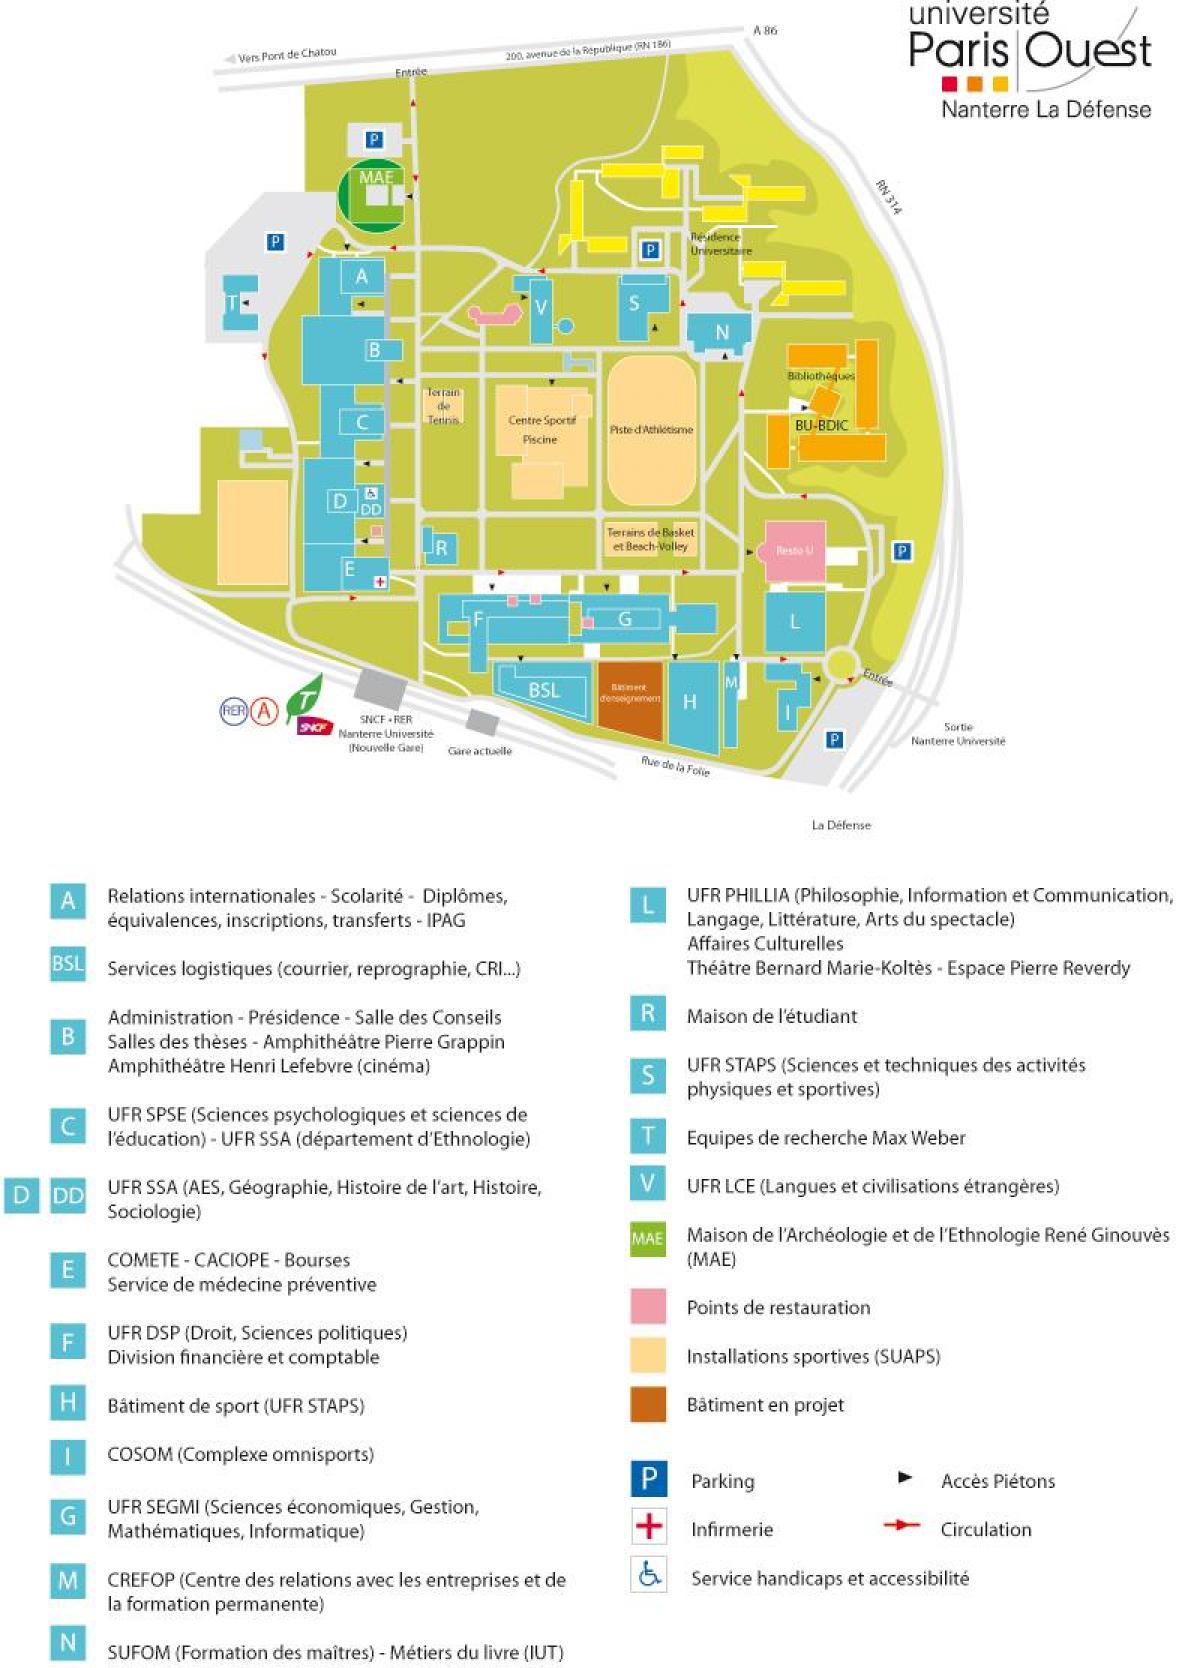 विश्वविद्यालय का नक्शा Nanterre